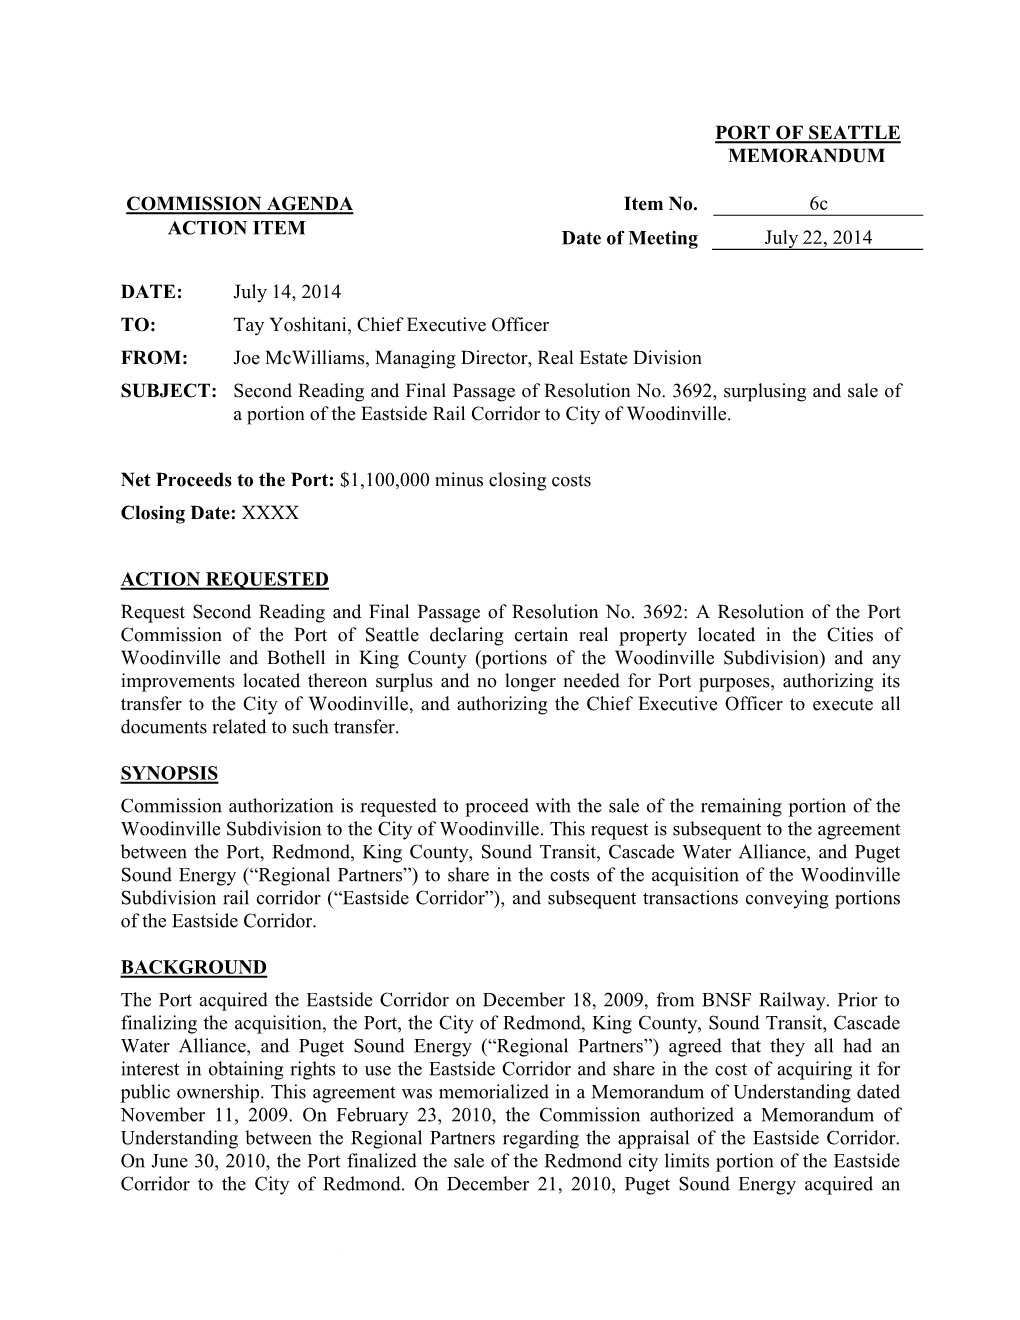 Template Revised May 30, 2013. PORT of SEATTLE MEMORANDUM COMMISSION AGENDA Item No. 6C ACTION ITEM Date of Meeting July 22, 20